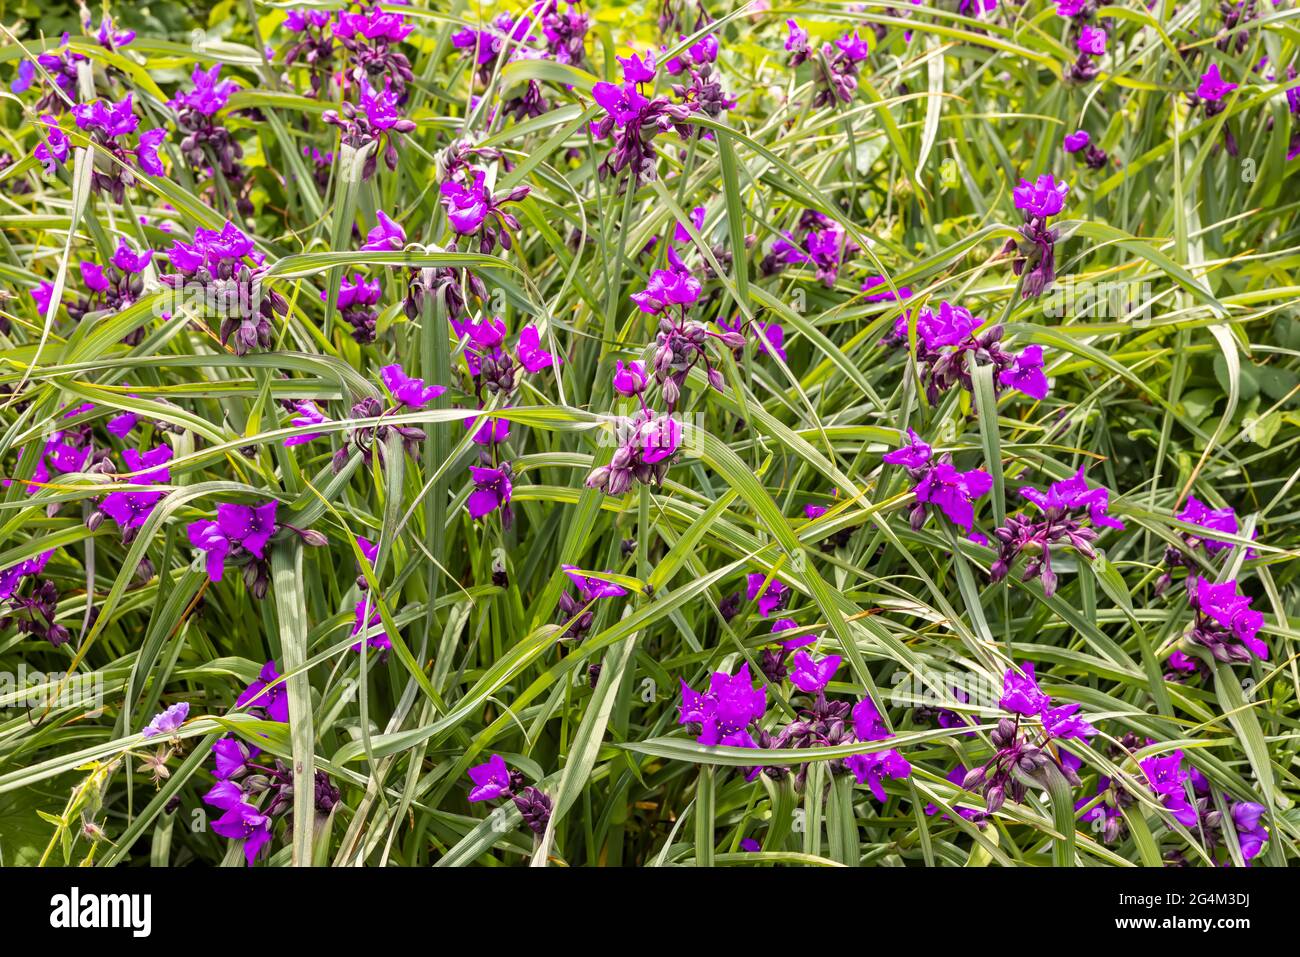 Small purple flowering tradescantia plant in a garden. Stock Photo